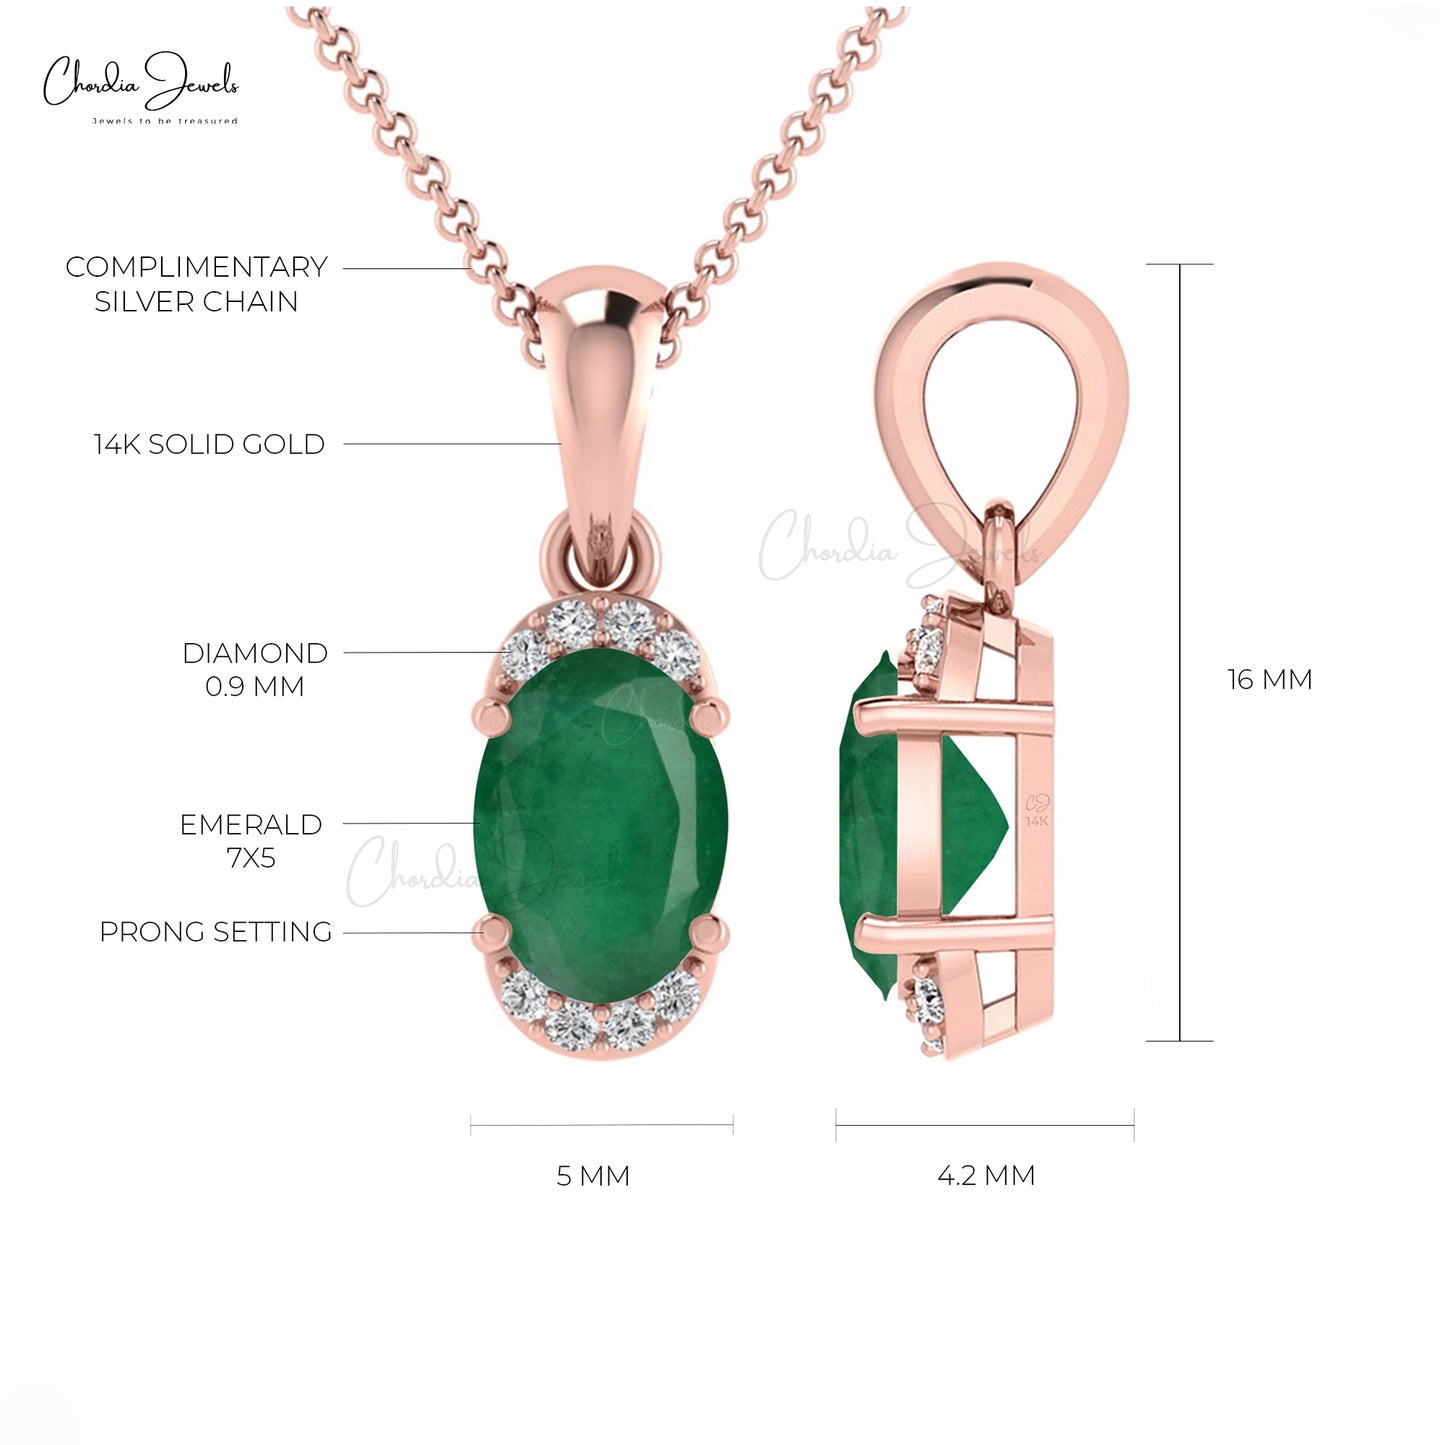 Load image into Gallery viewer, Genuine Half Halo Diamond Pendant 0.72ct Emerald Gemstone 14k Gold Pendant For Wedding Gift
